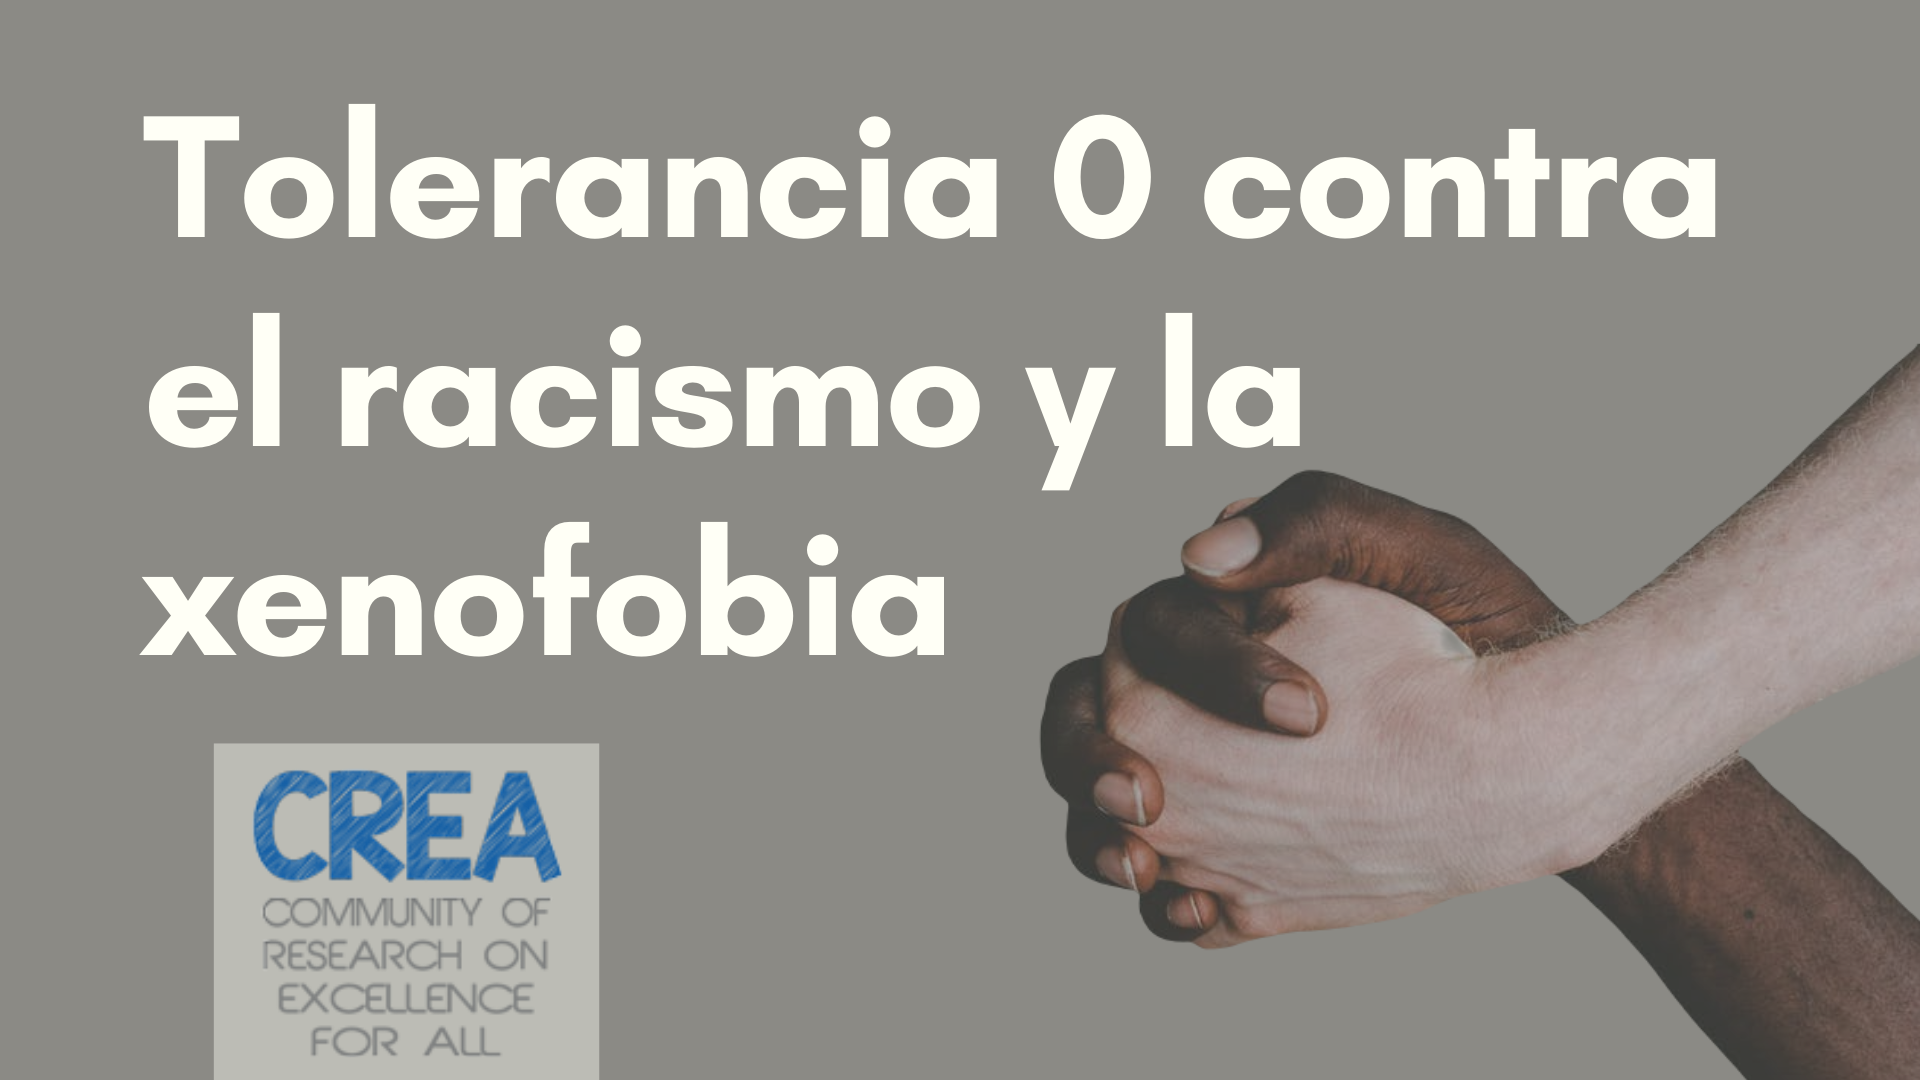 Zero-tolerance towards racism and xenophobia